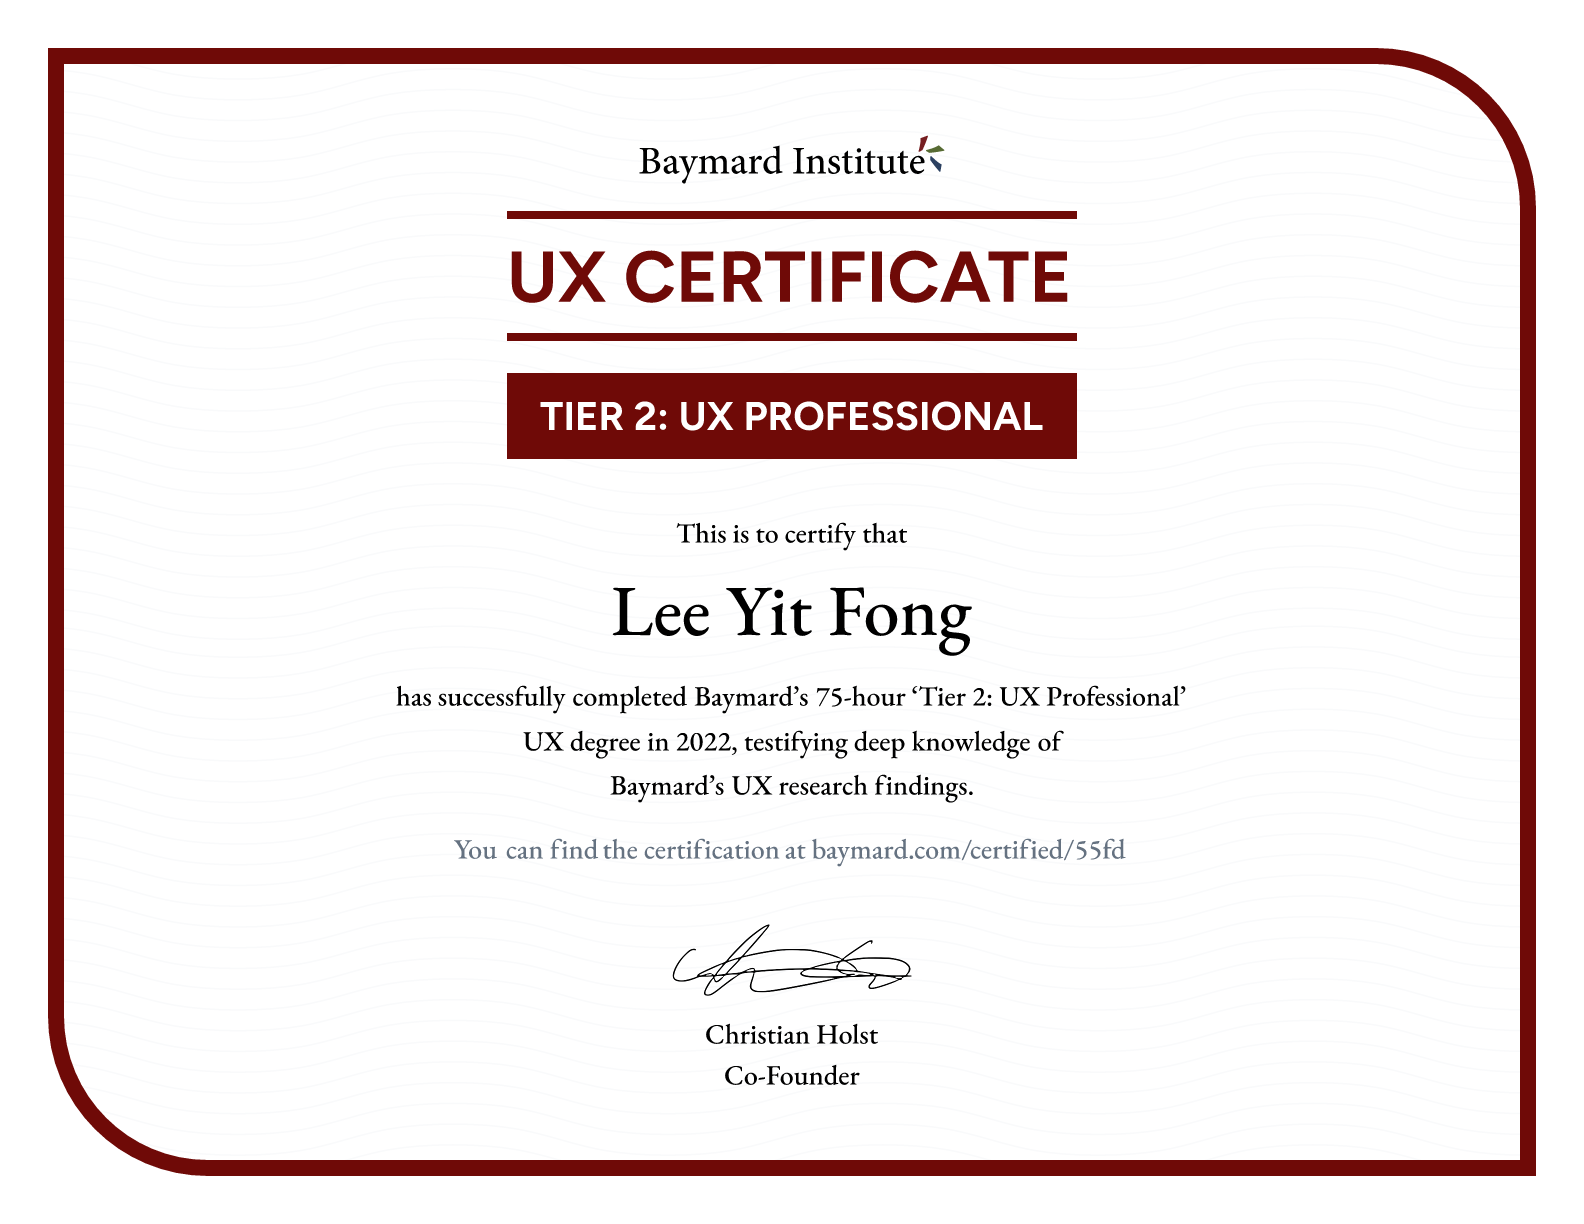 Lee Yit Fong’s certificate